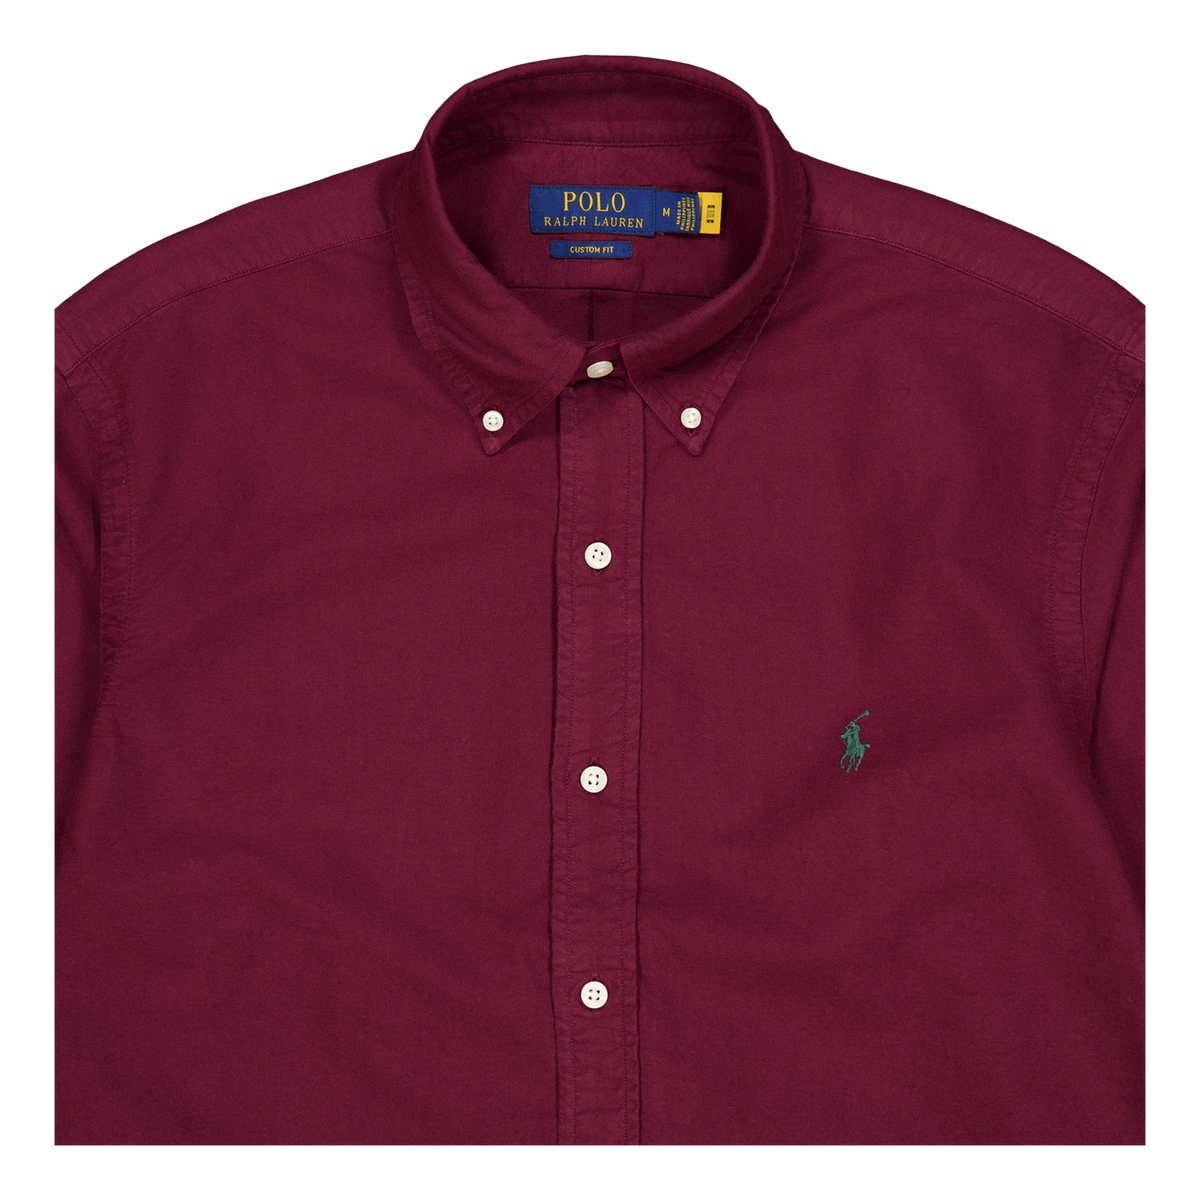 Polo Ralph Lauren Gd Oxford Custom Fit Shirt 046 Harvard Wine